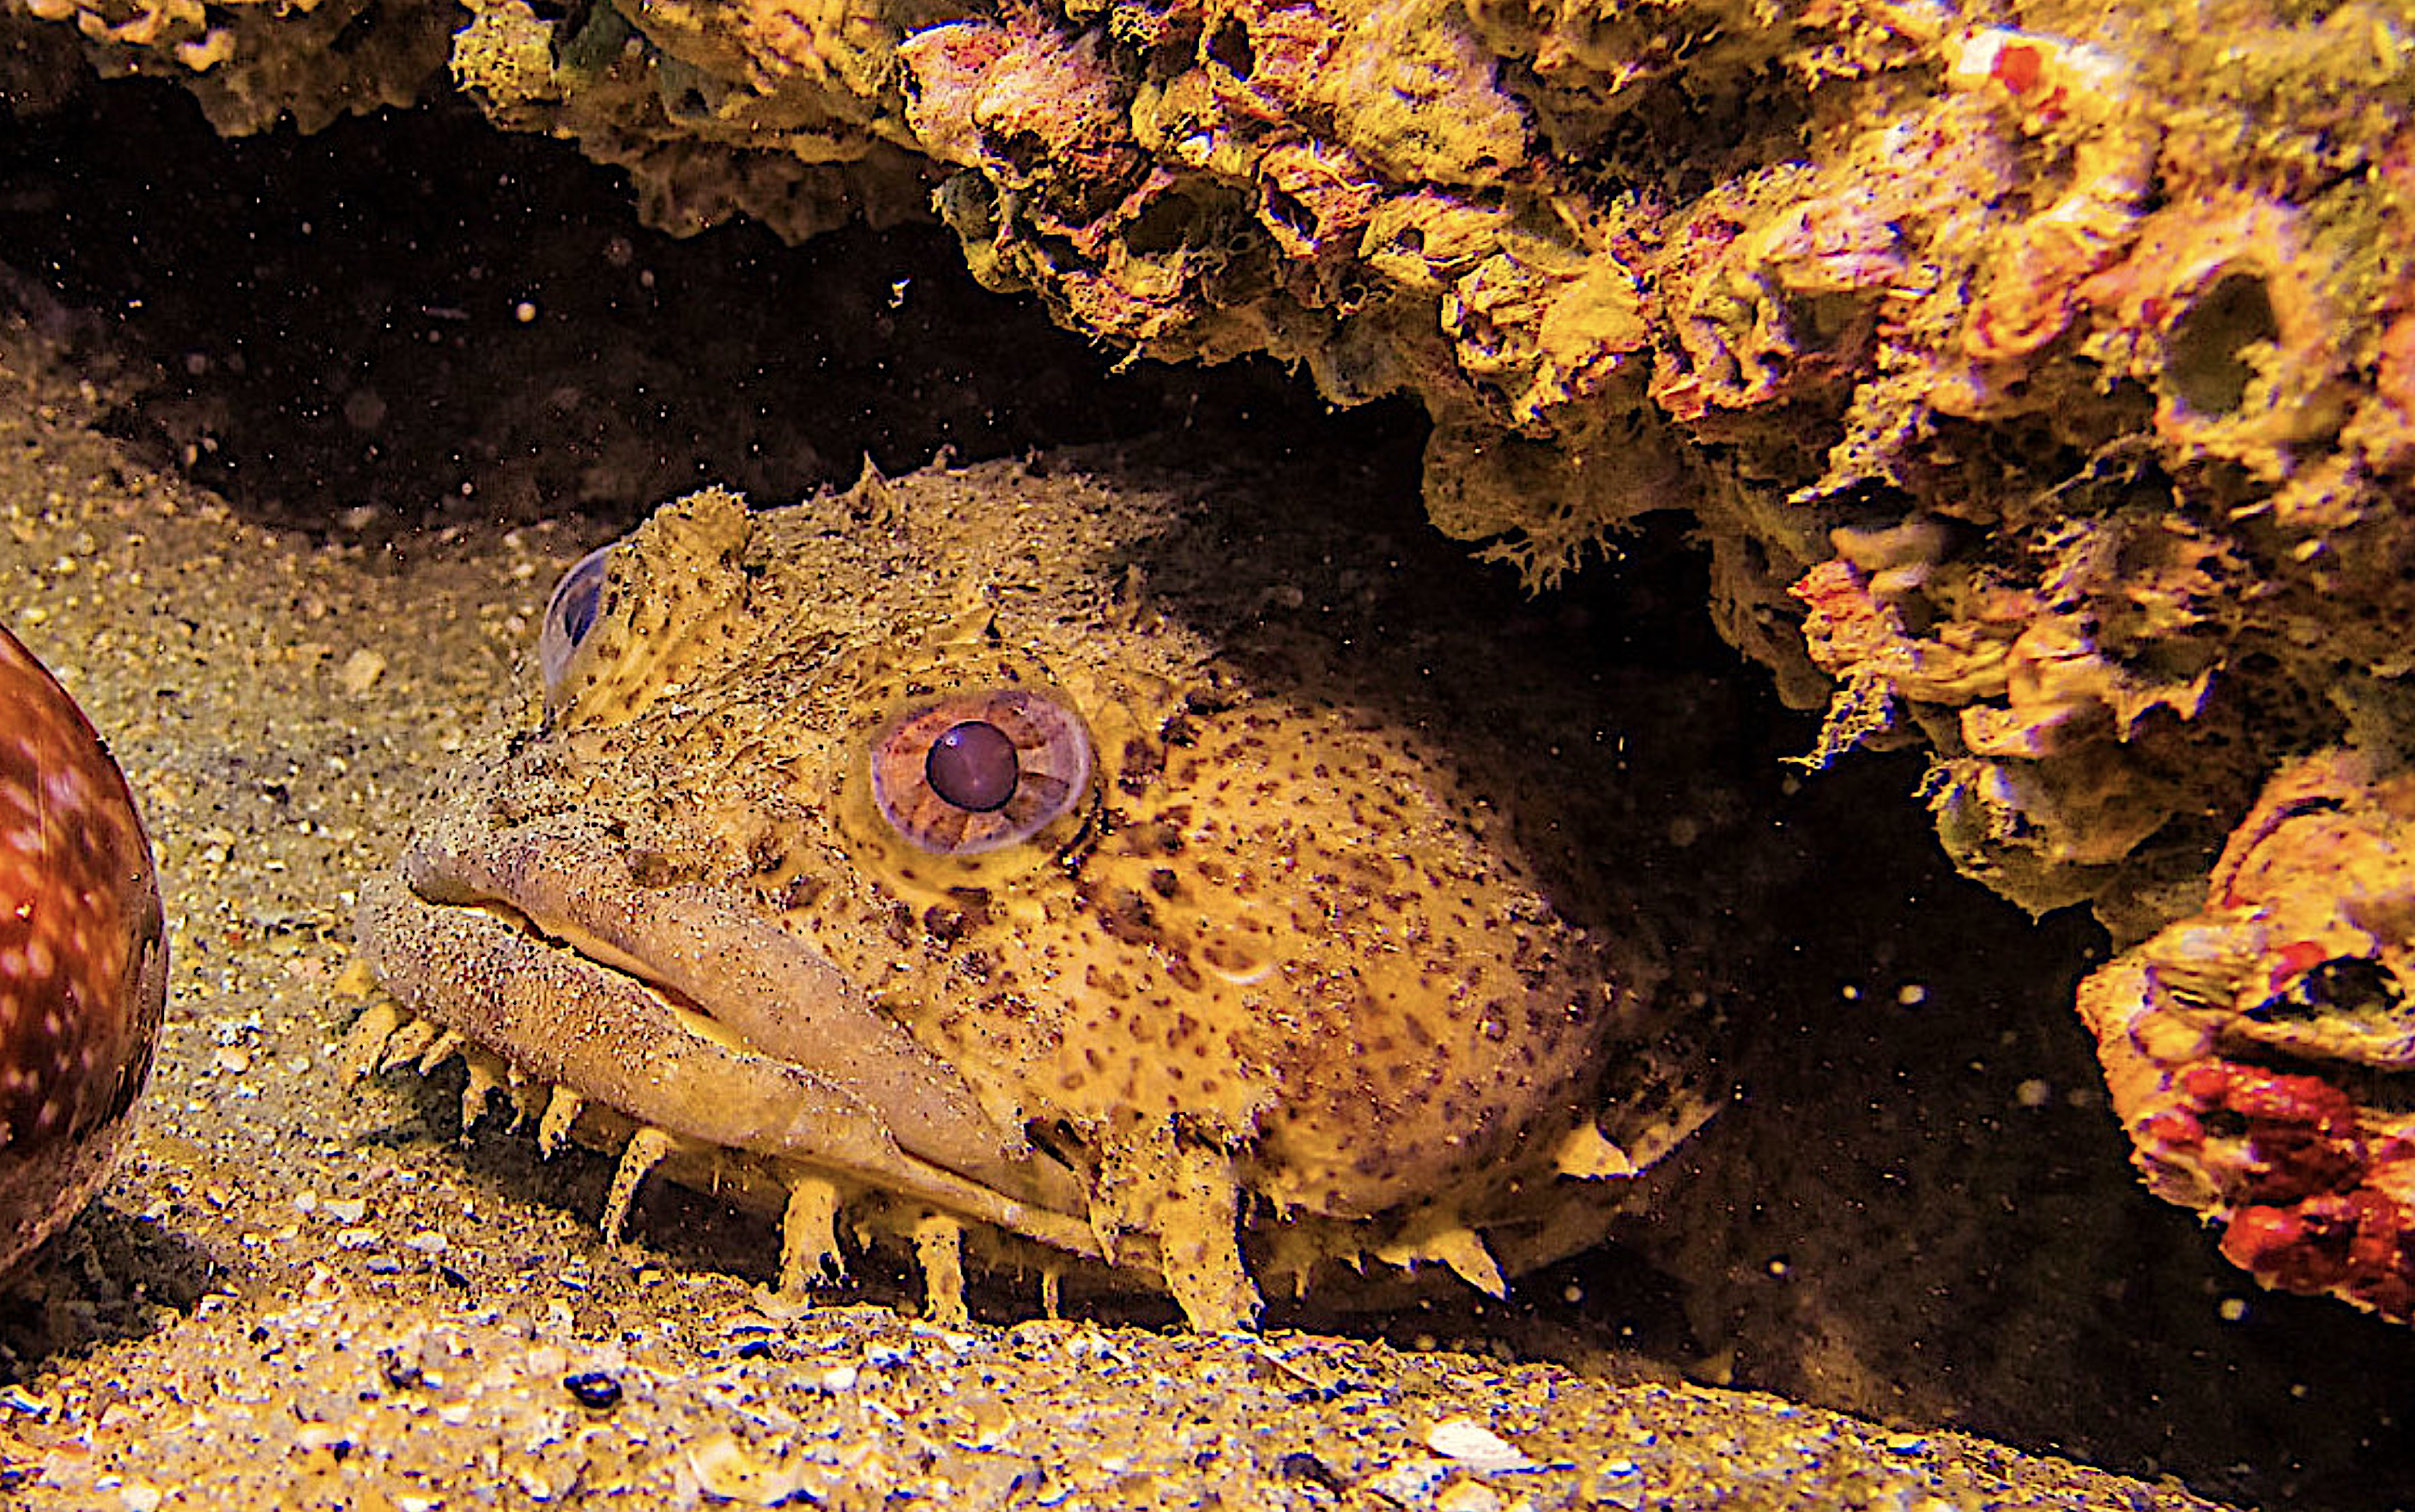 image: oyster toadfish. Credit: Allison Scott/NOAA.